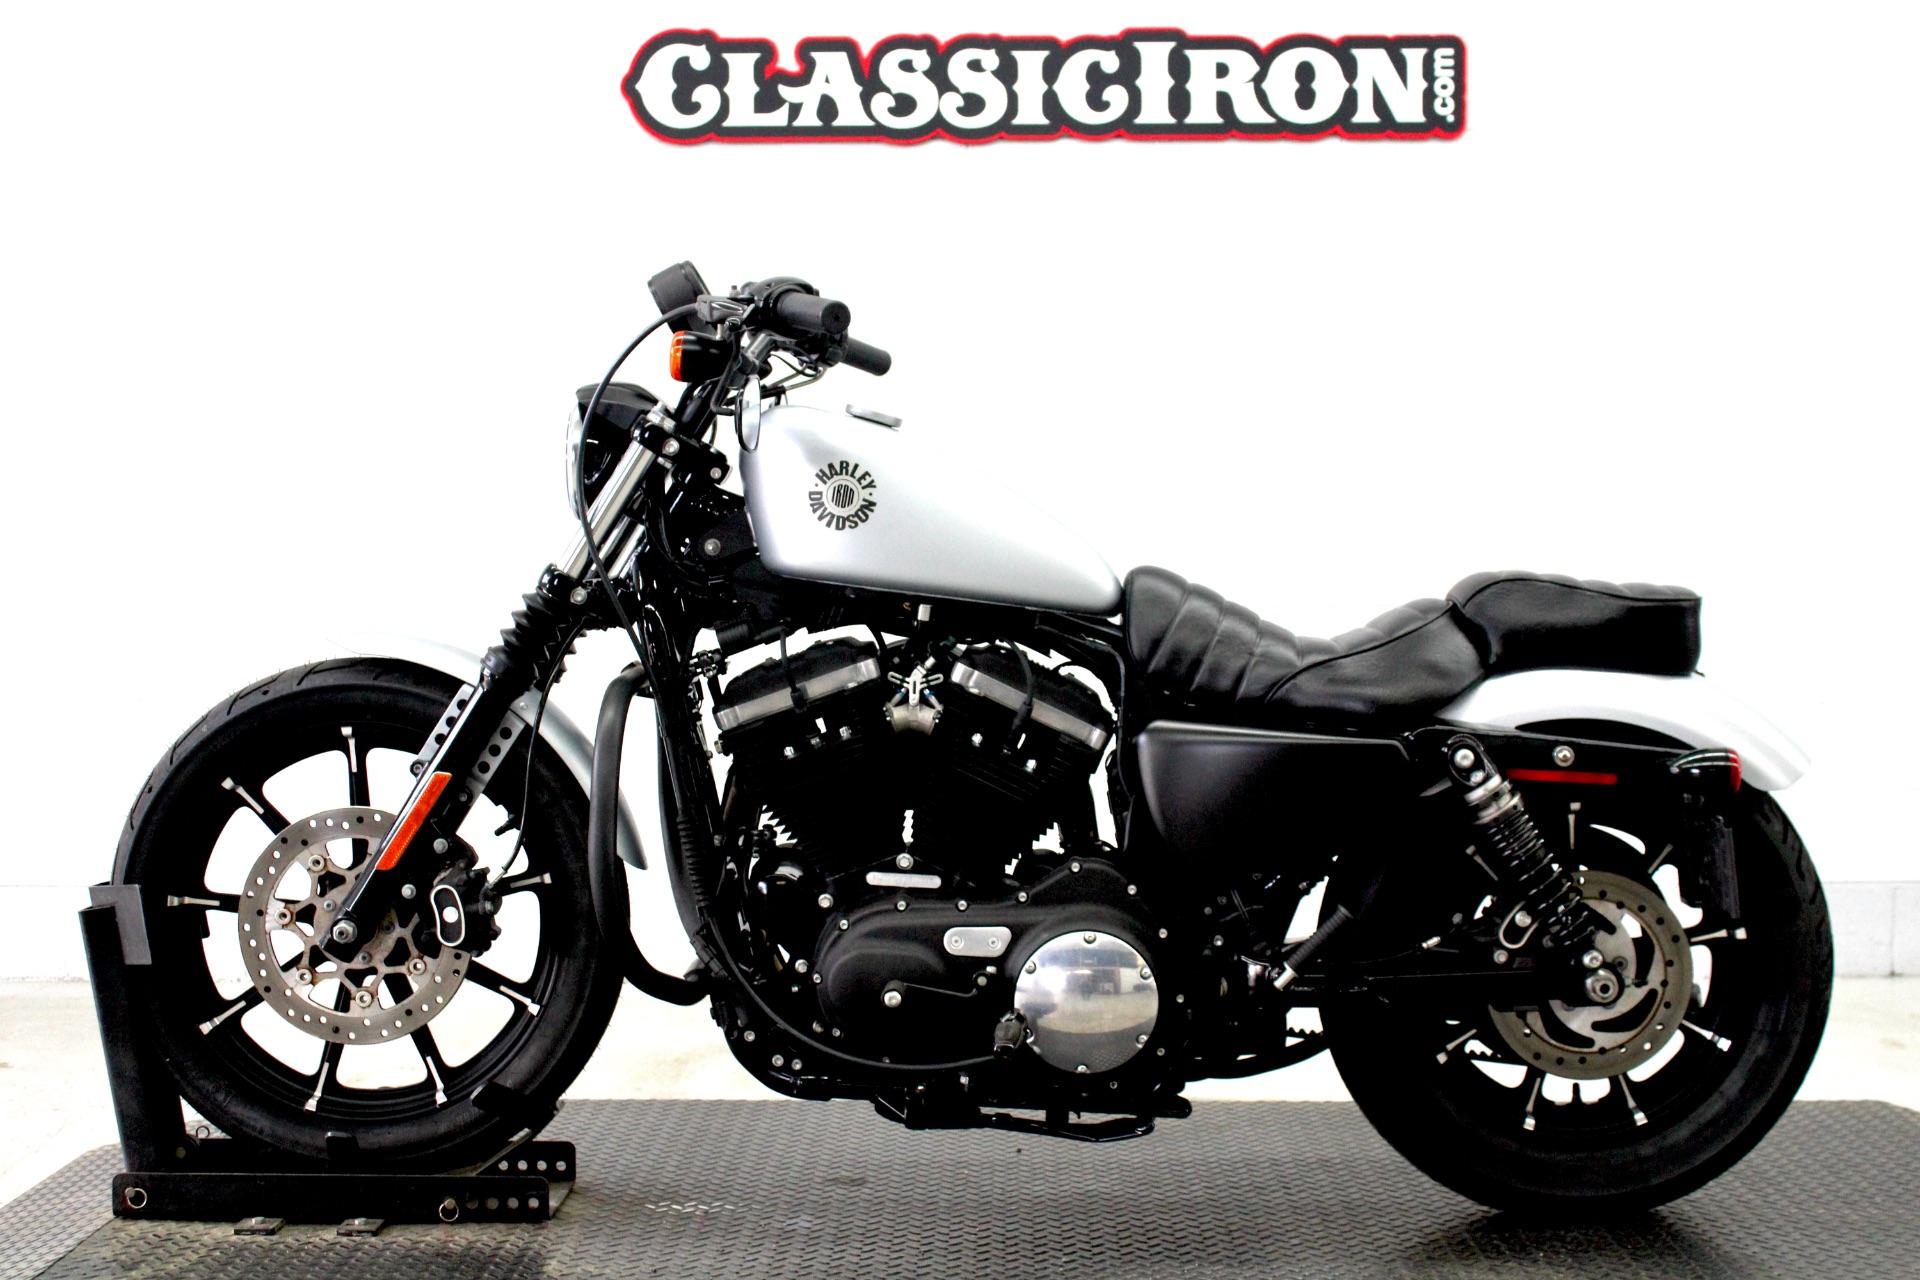 2020 Harley-Davidson Iron 883™ in Fredericksburg, Virginia - Photo 4